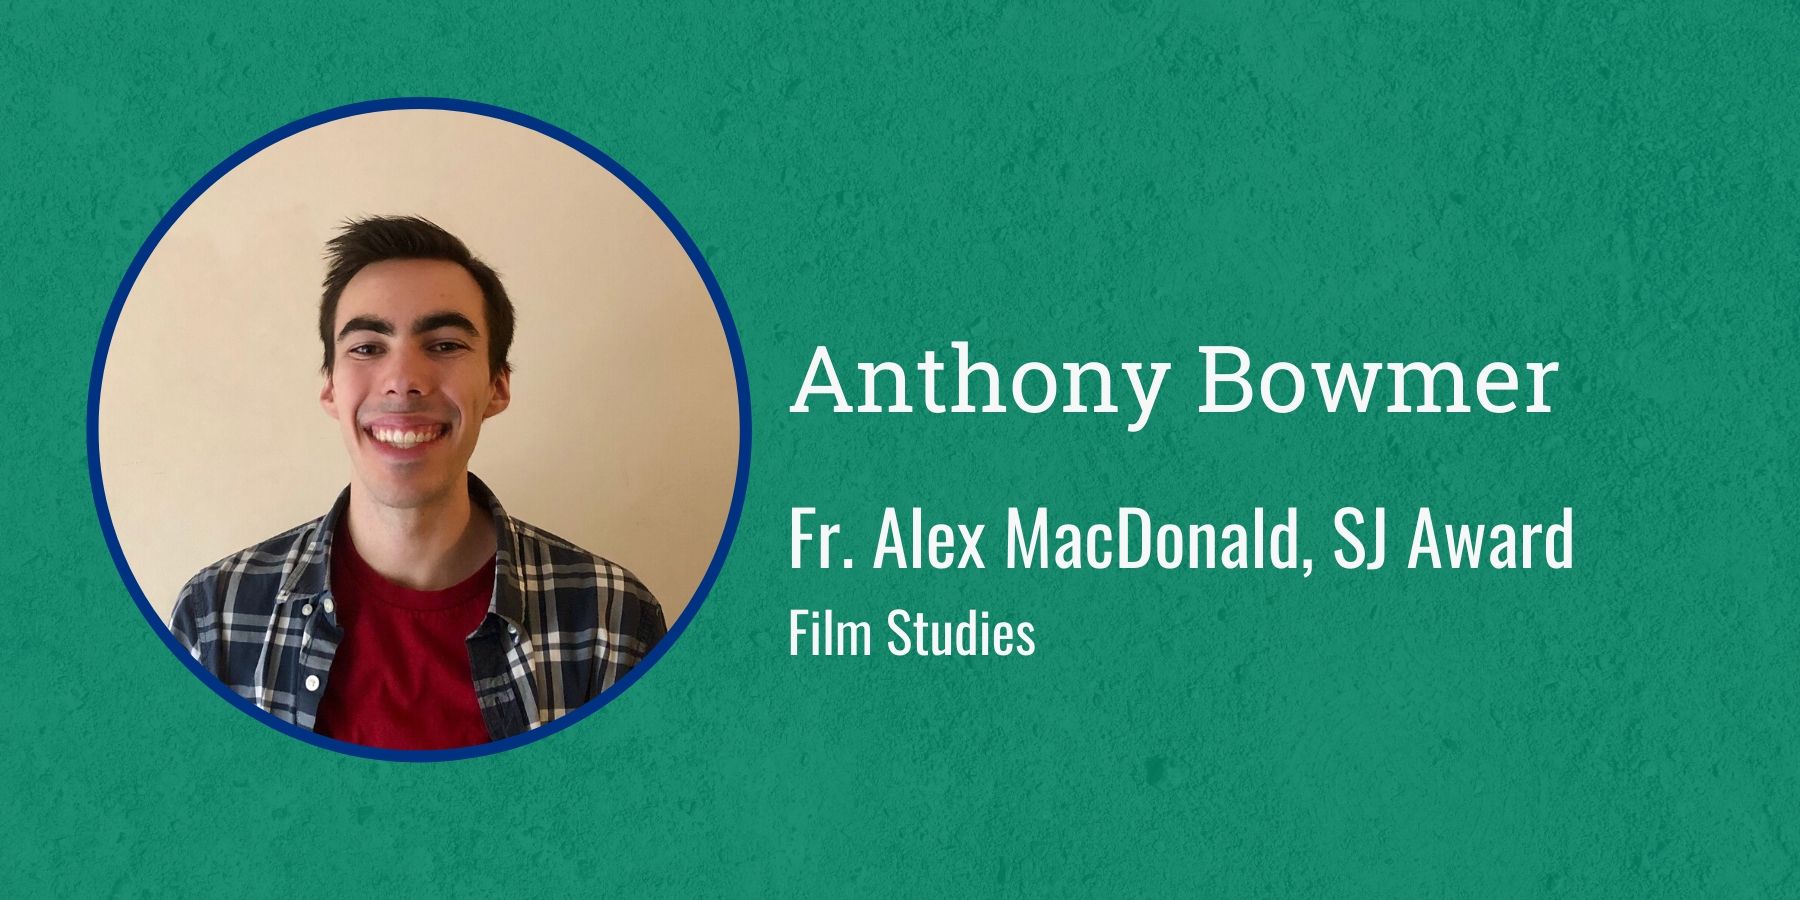 Photo of Anthony Bowmer and text Fr. Alex MacDonald, S.J. Award, Film Studies
